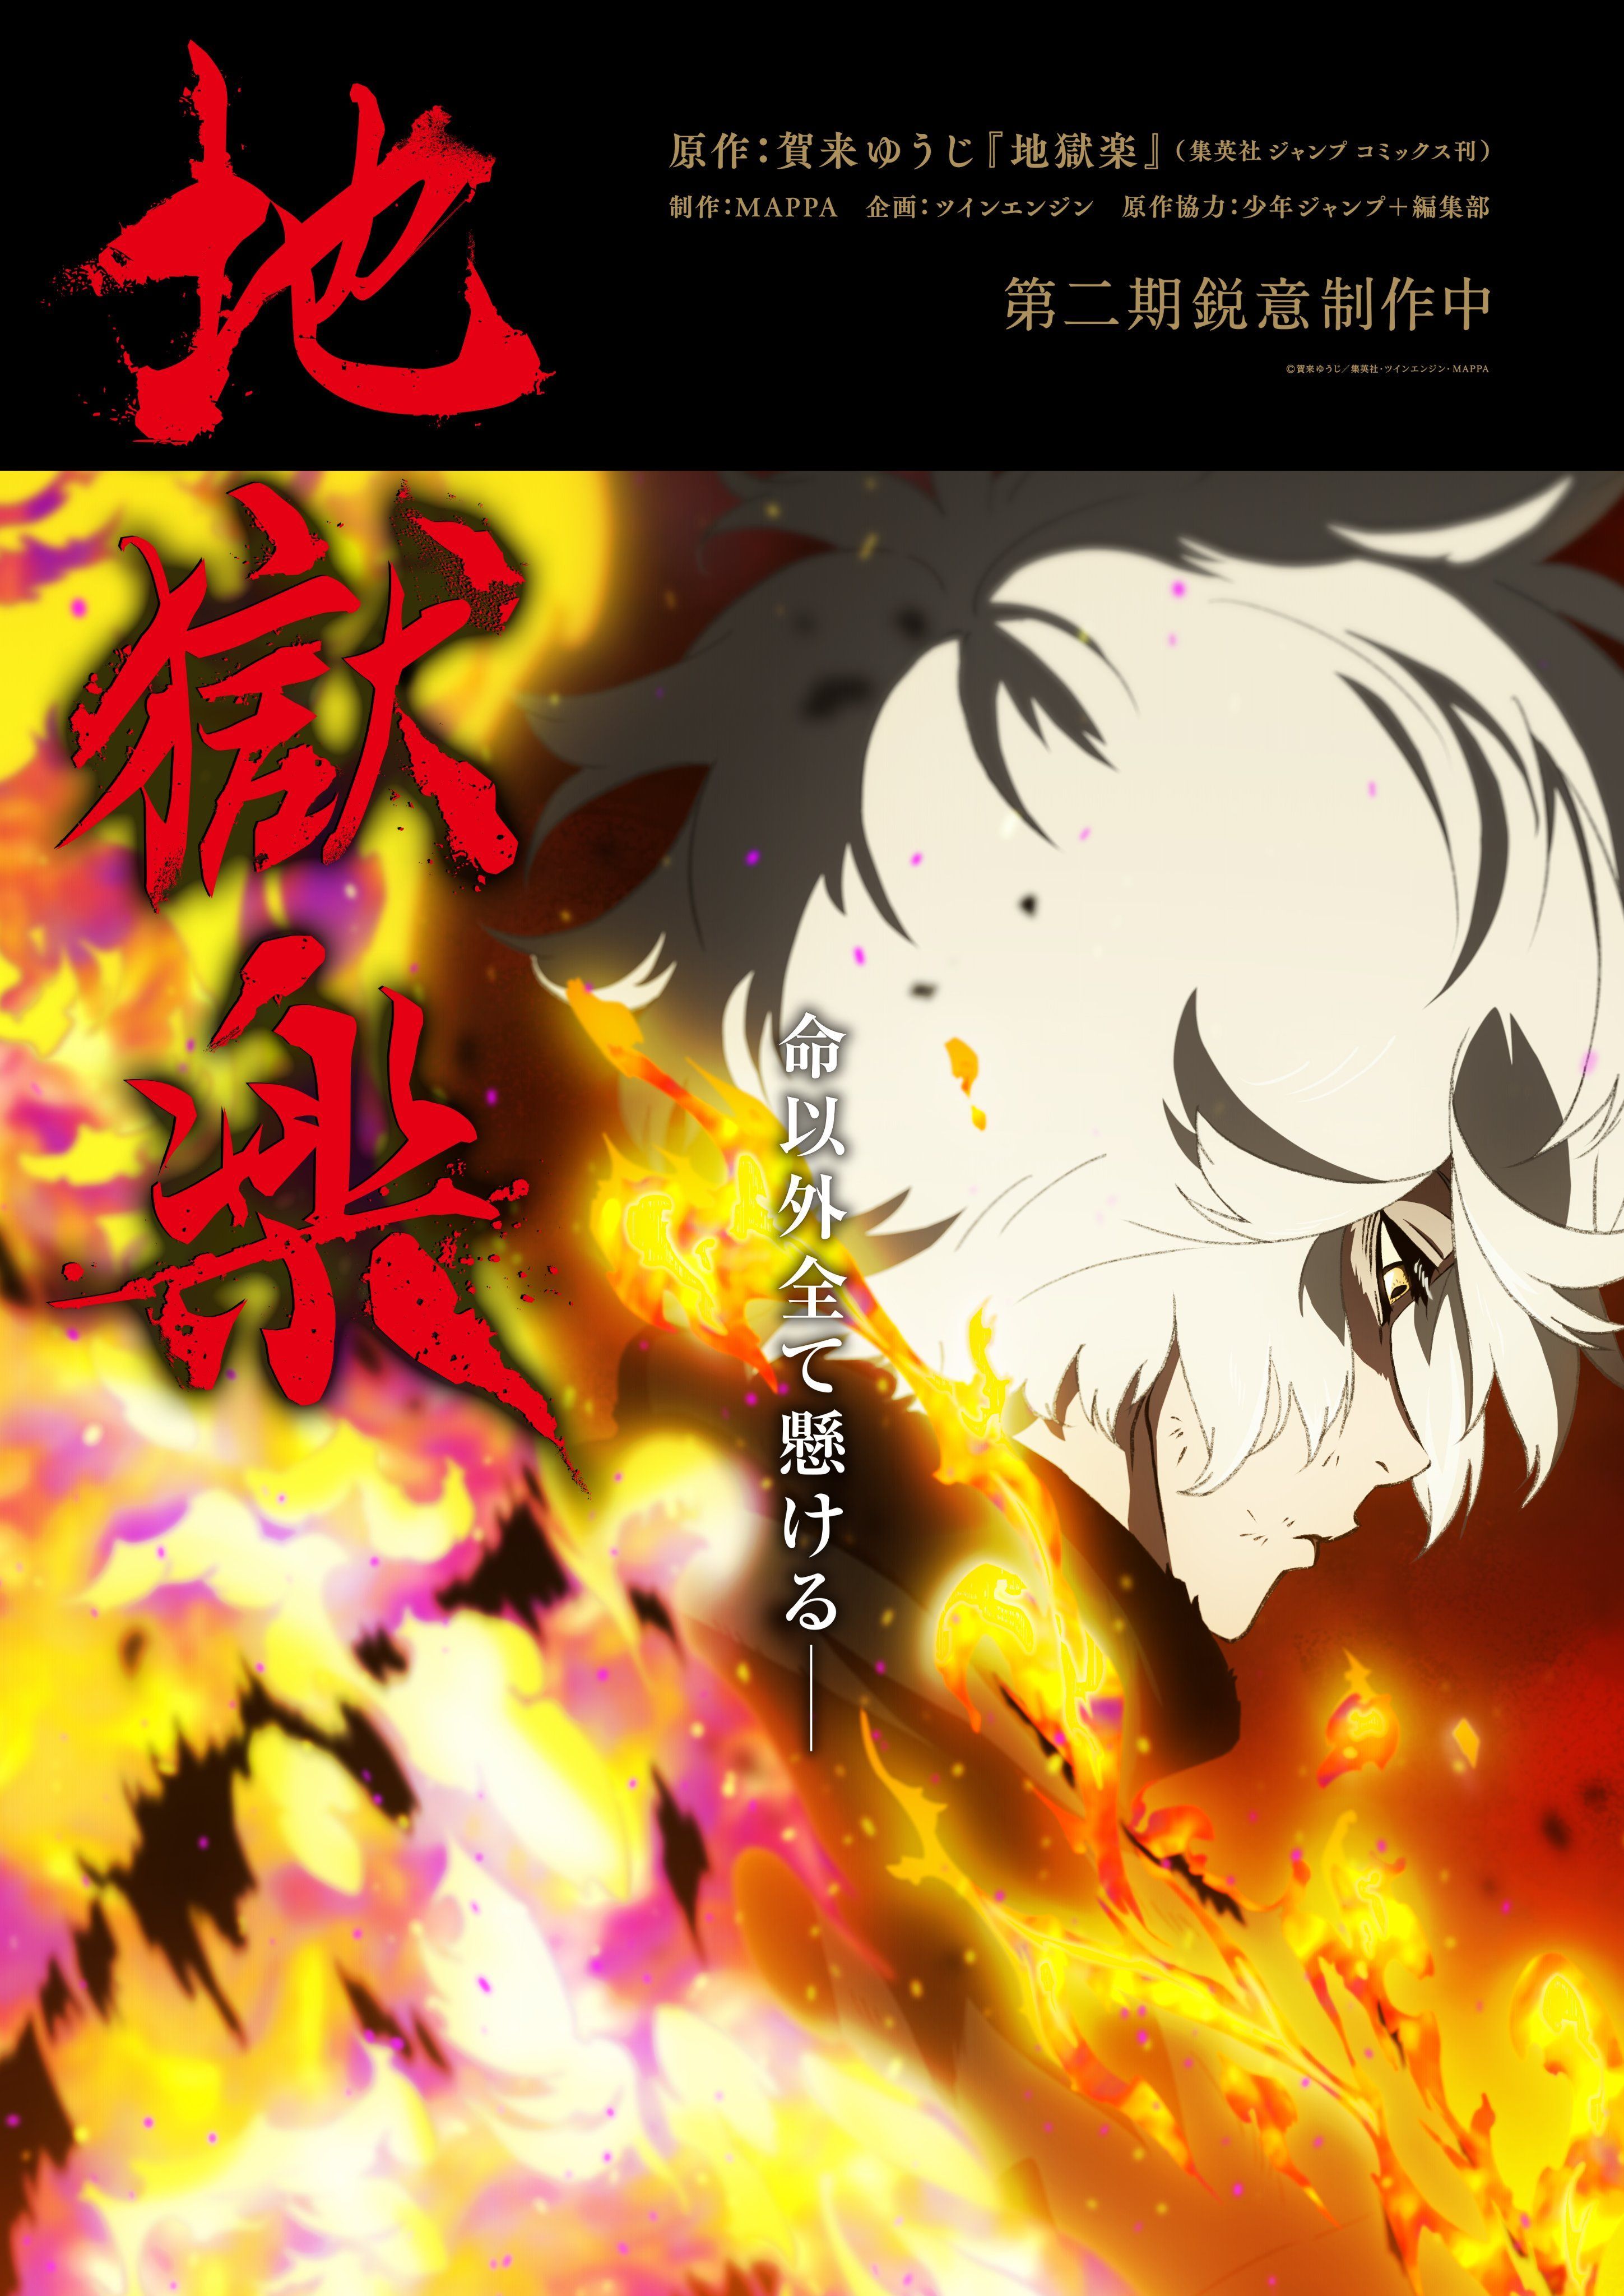 🇧🇷 Um Monstro Chegou! Anime - Tower of God #otakusbrasil #animeengra